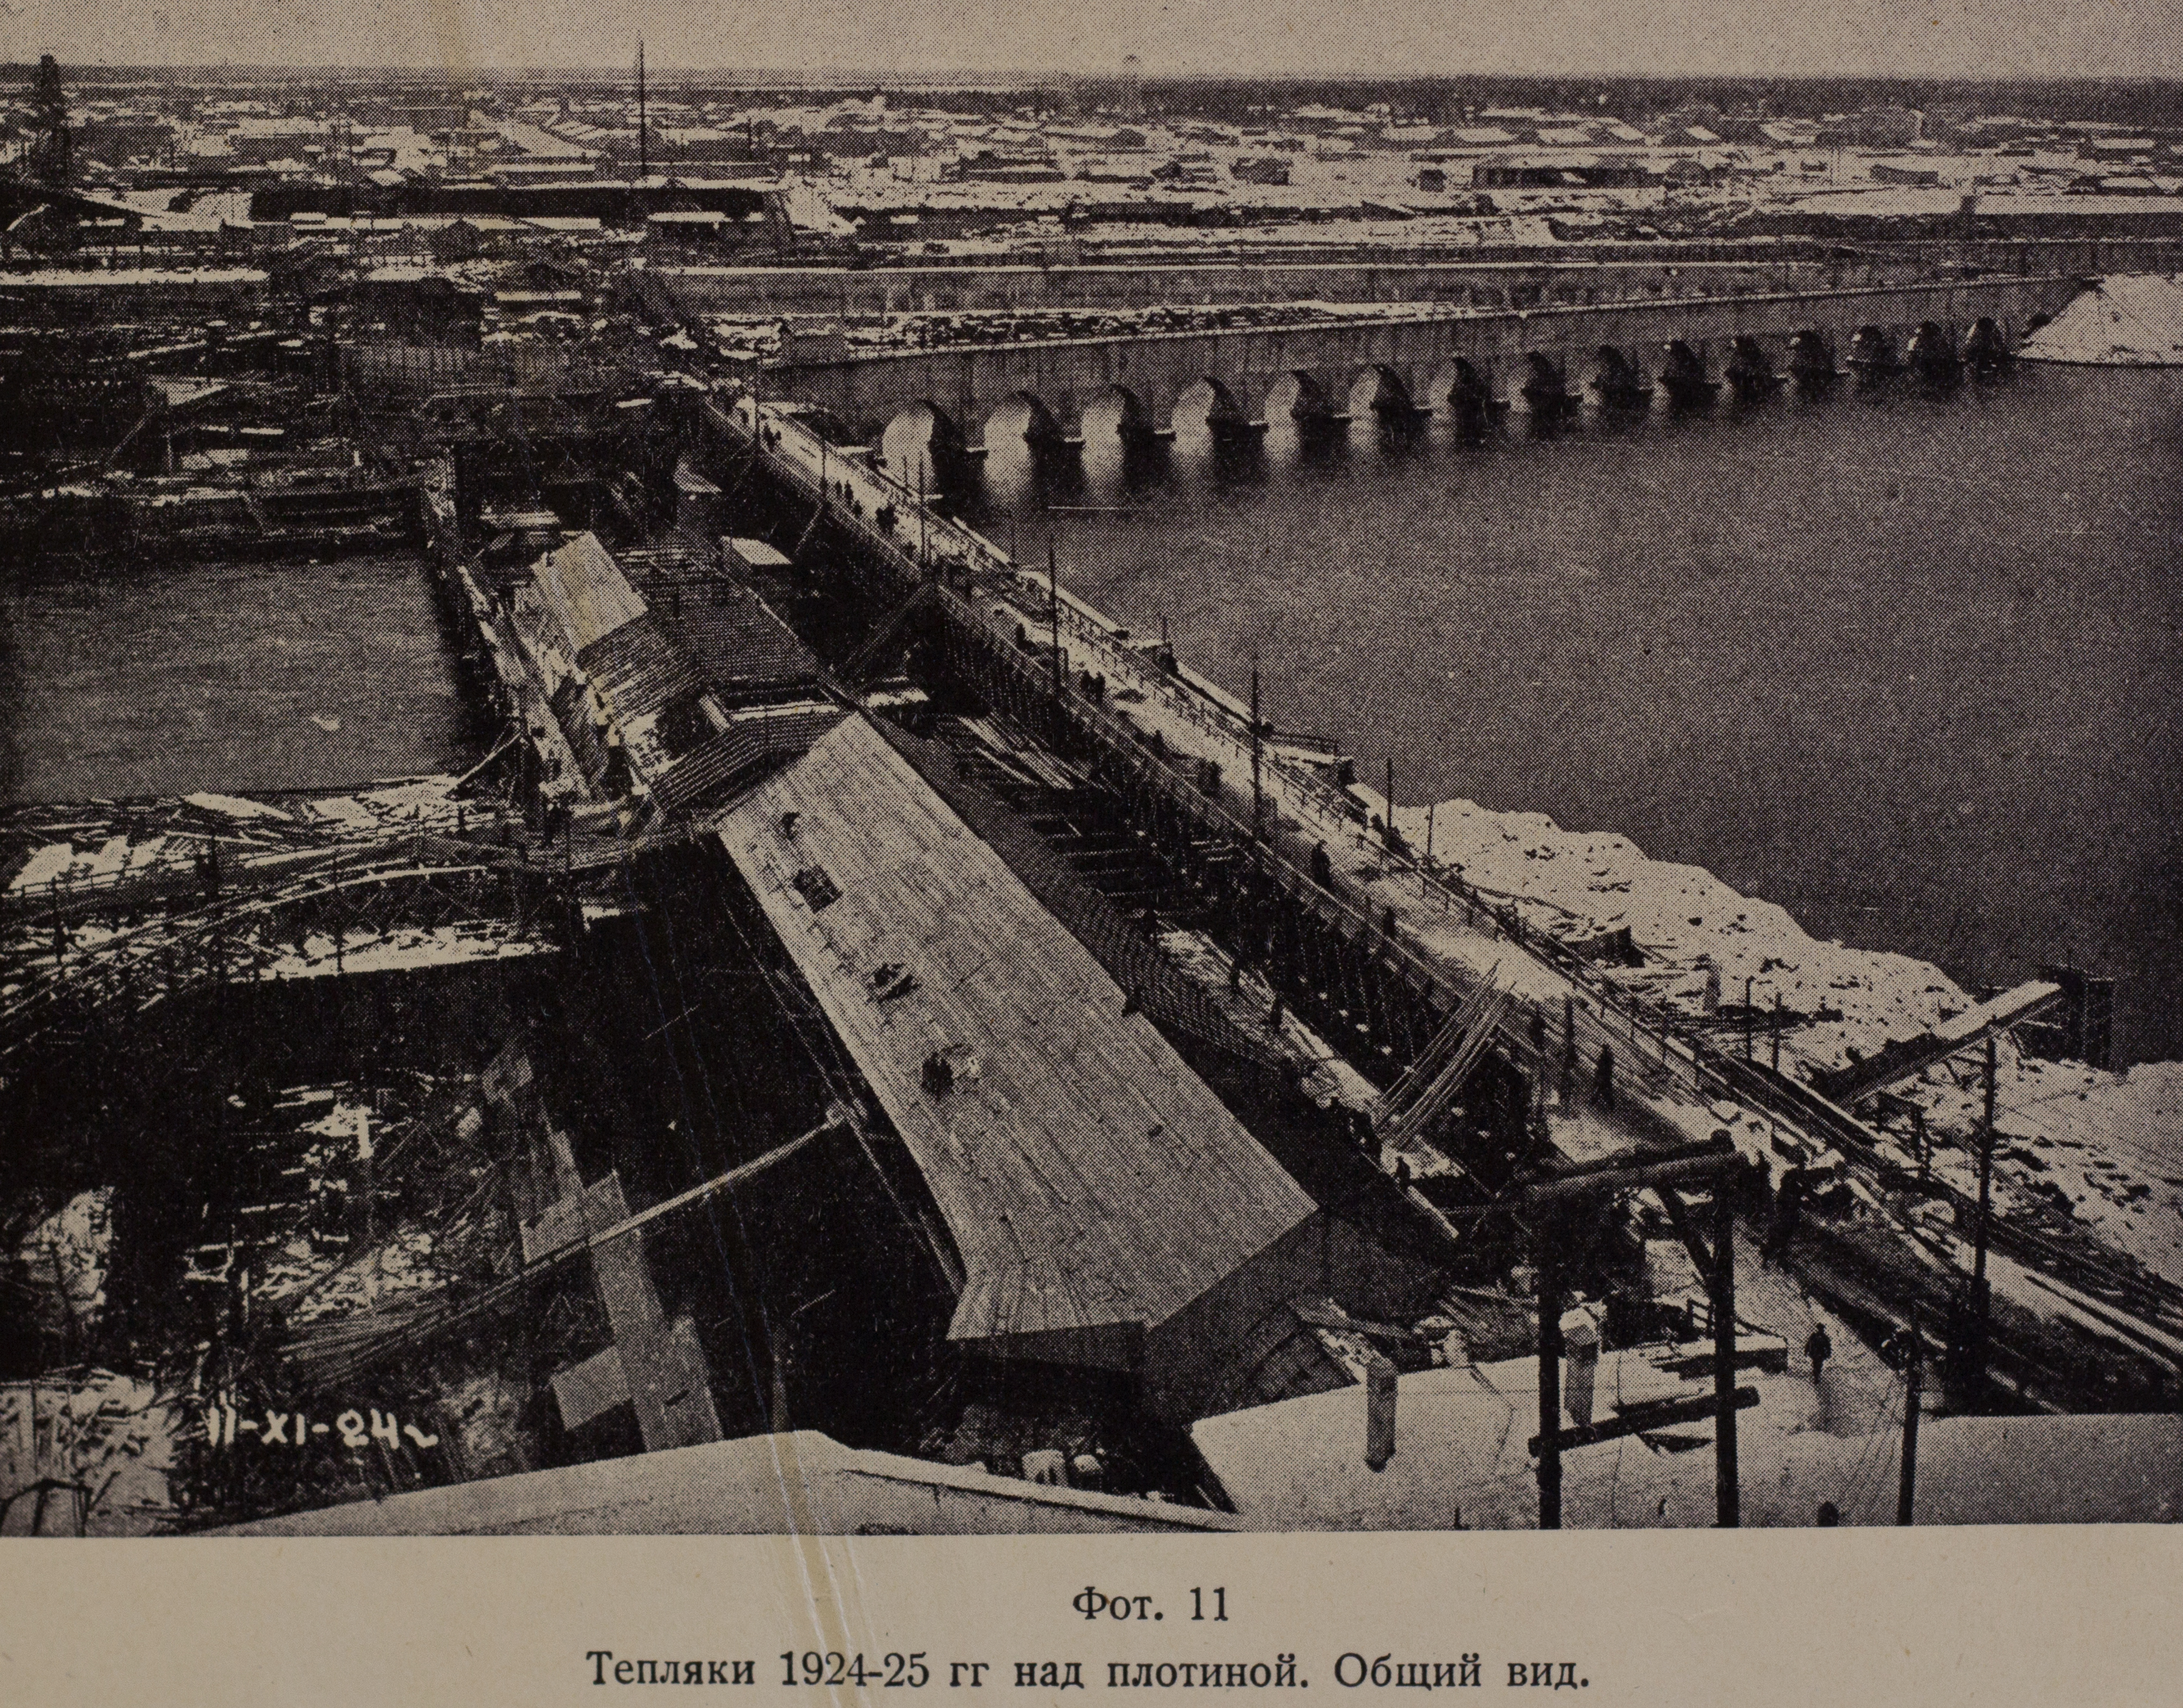 Тепляки 1924 — 1925 гг. над плотиной. Общий вид